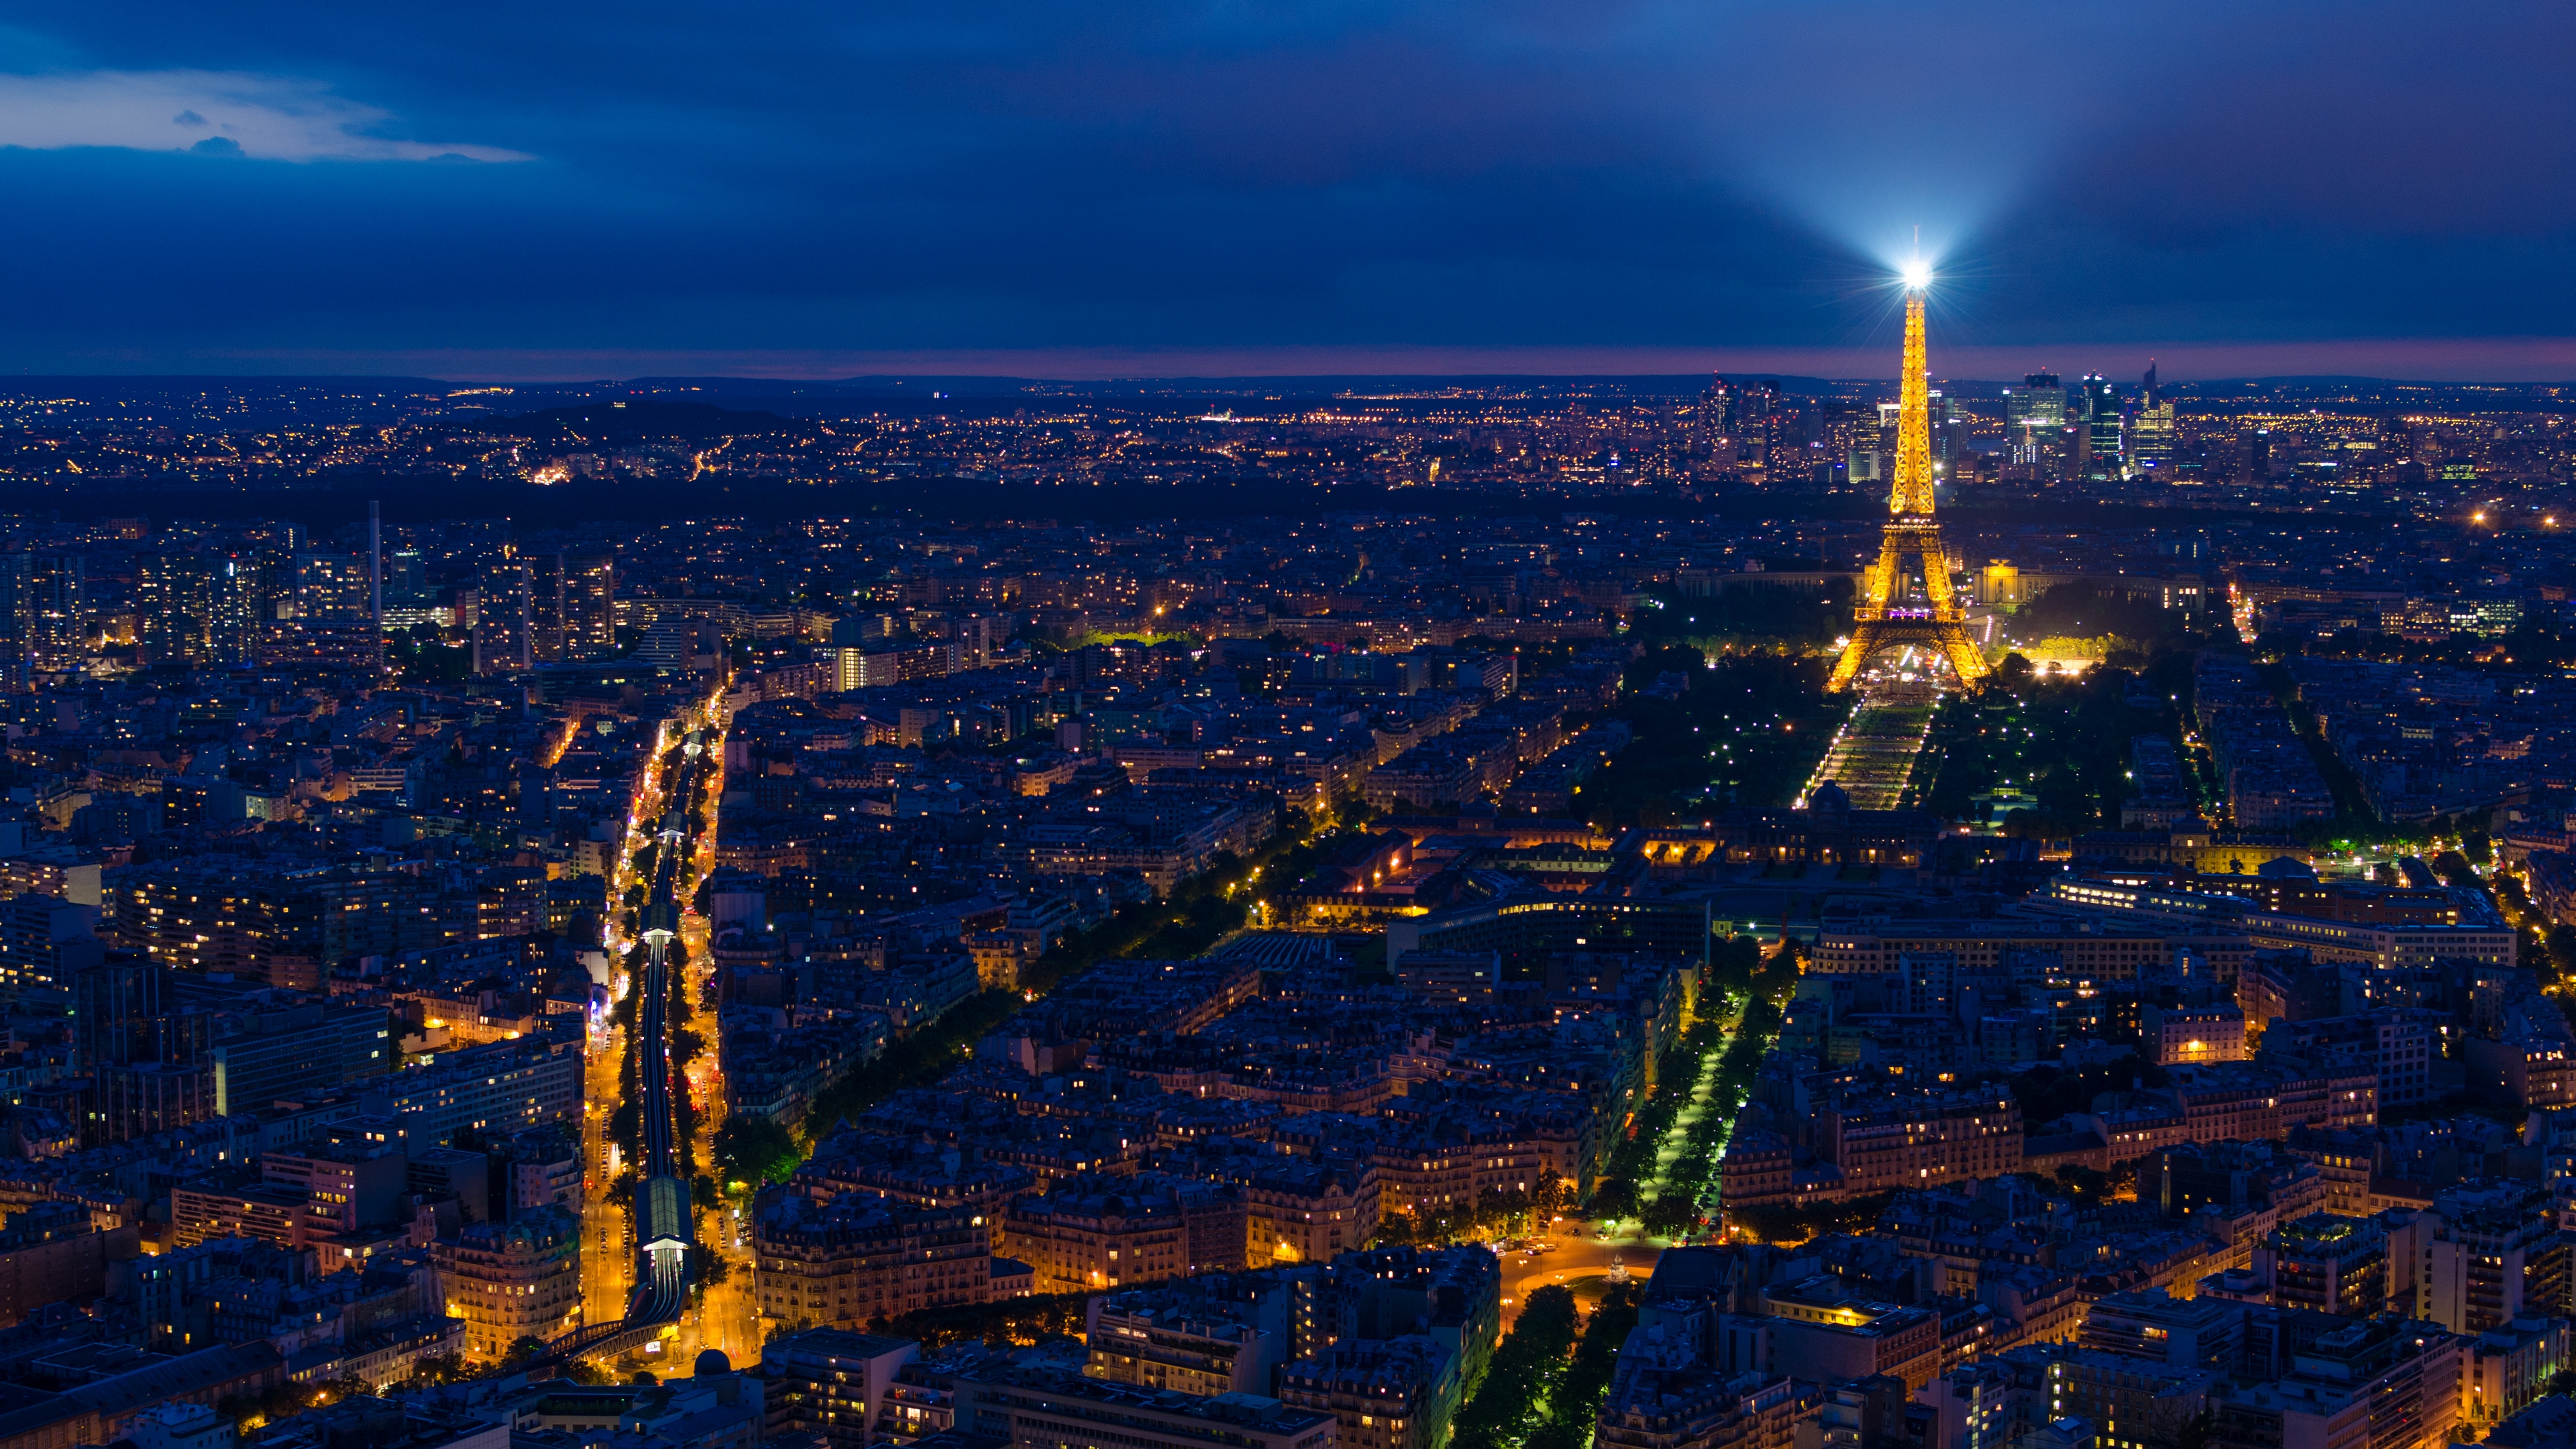 Eiffel Tower Night City Paris France City Lights 4k Paris Night